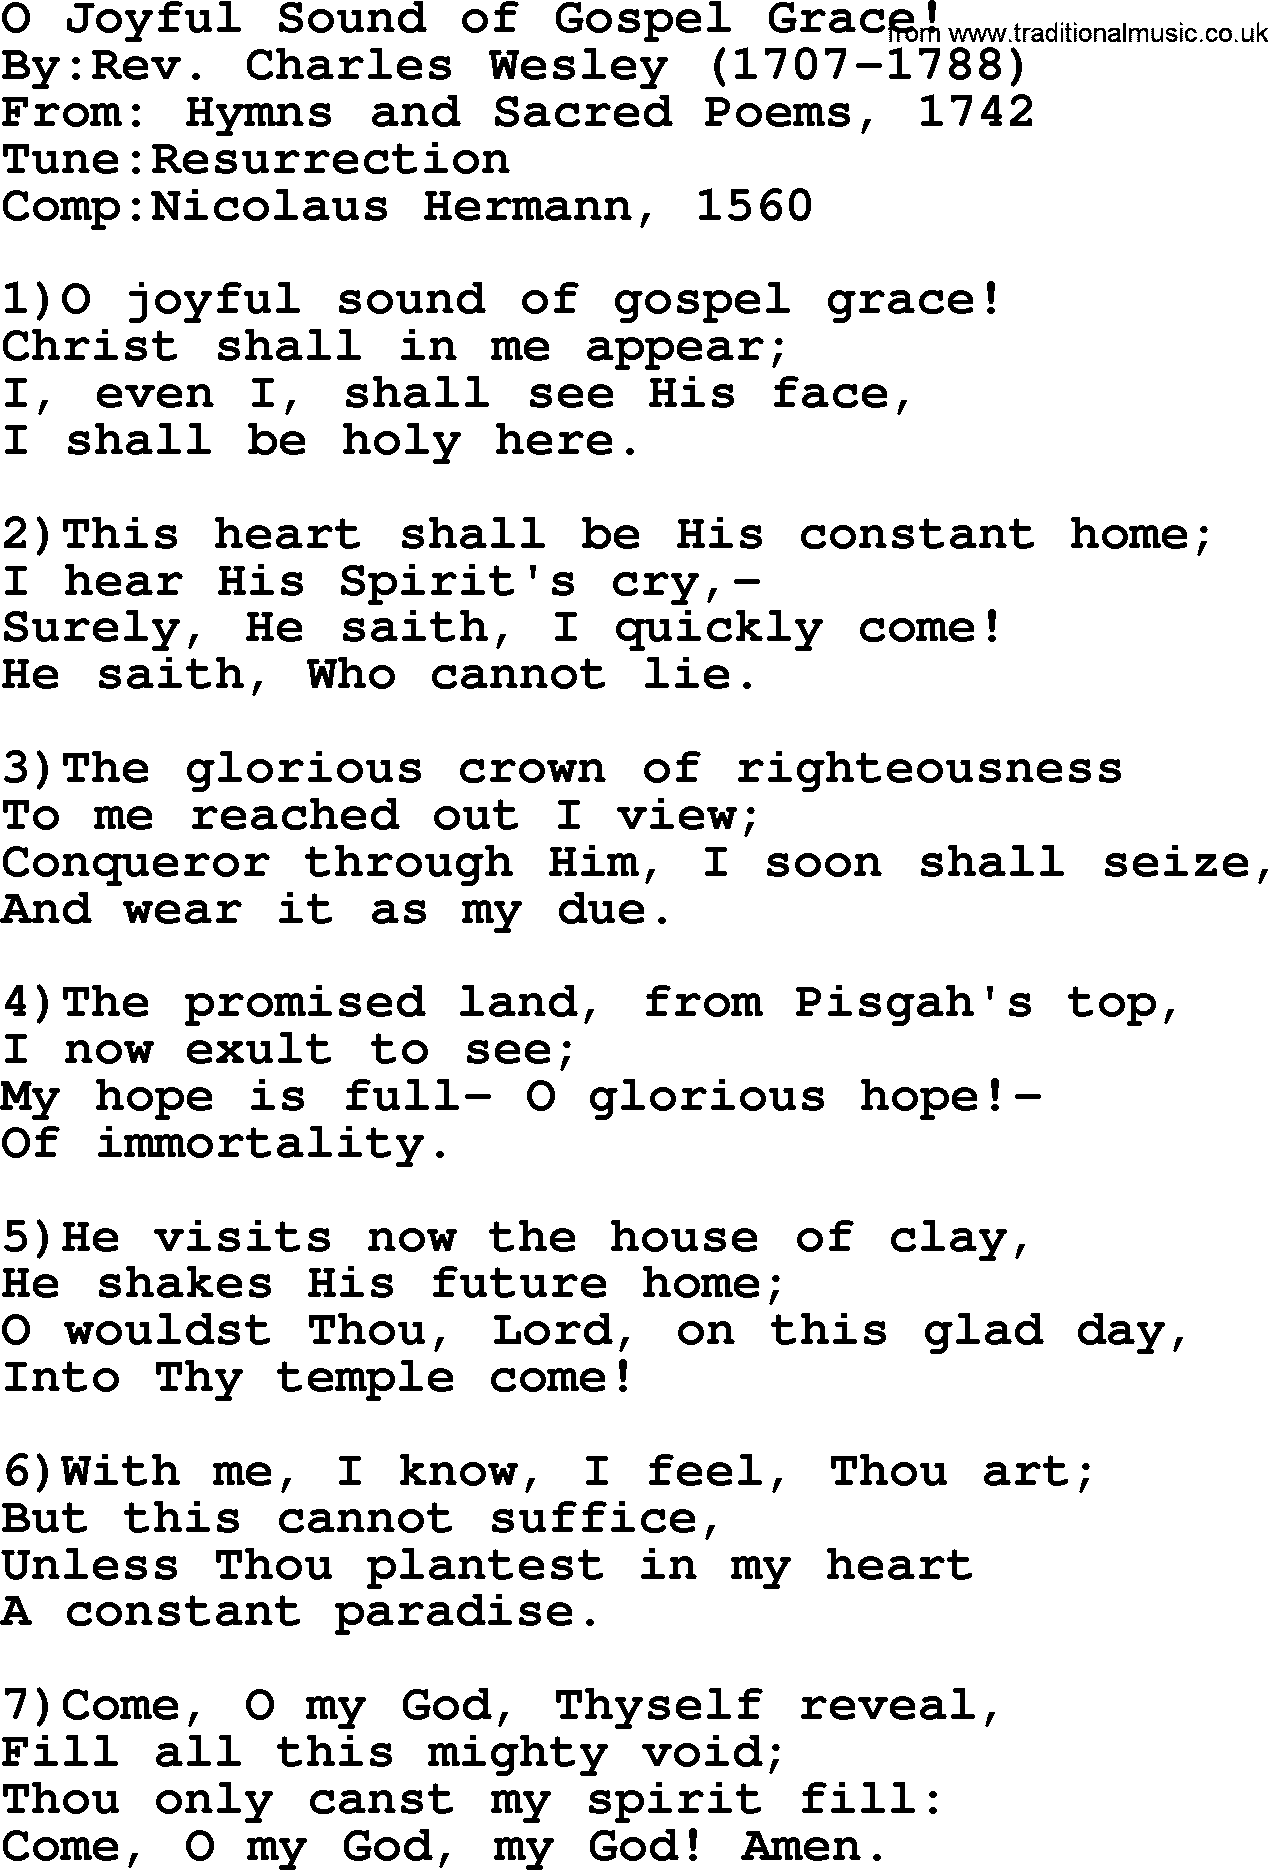 Methodist Hymn: O Joyful Sound Of Gospel Grace!, lyrics